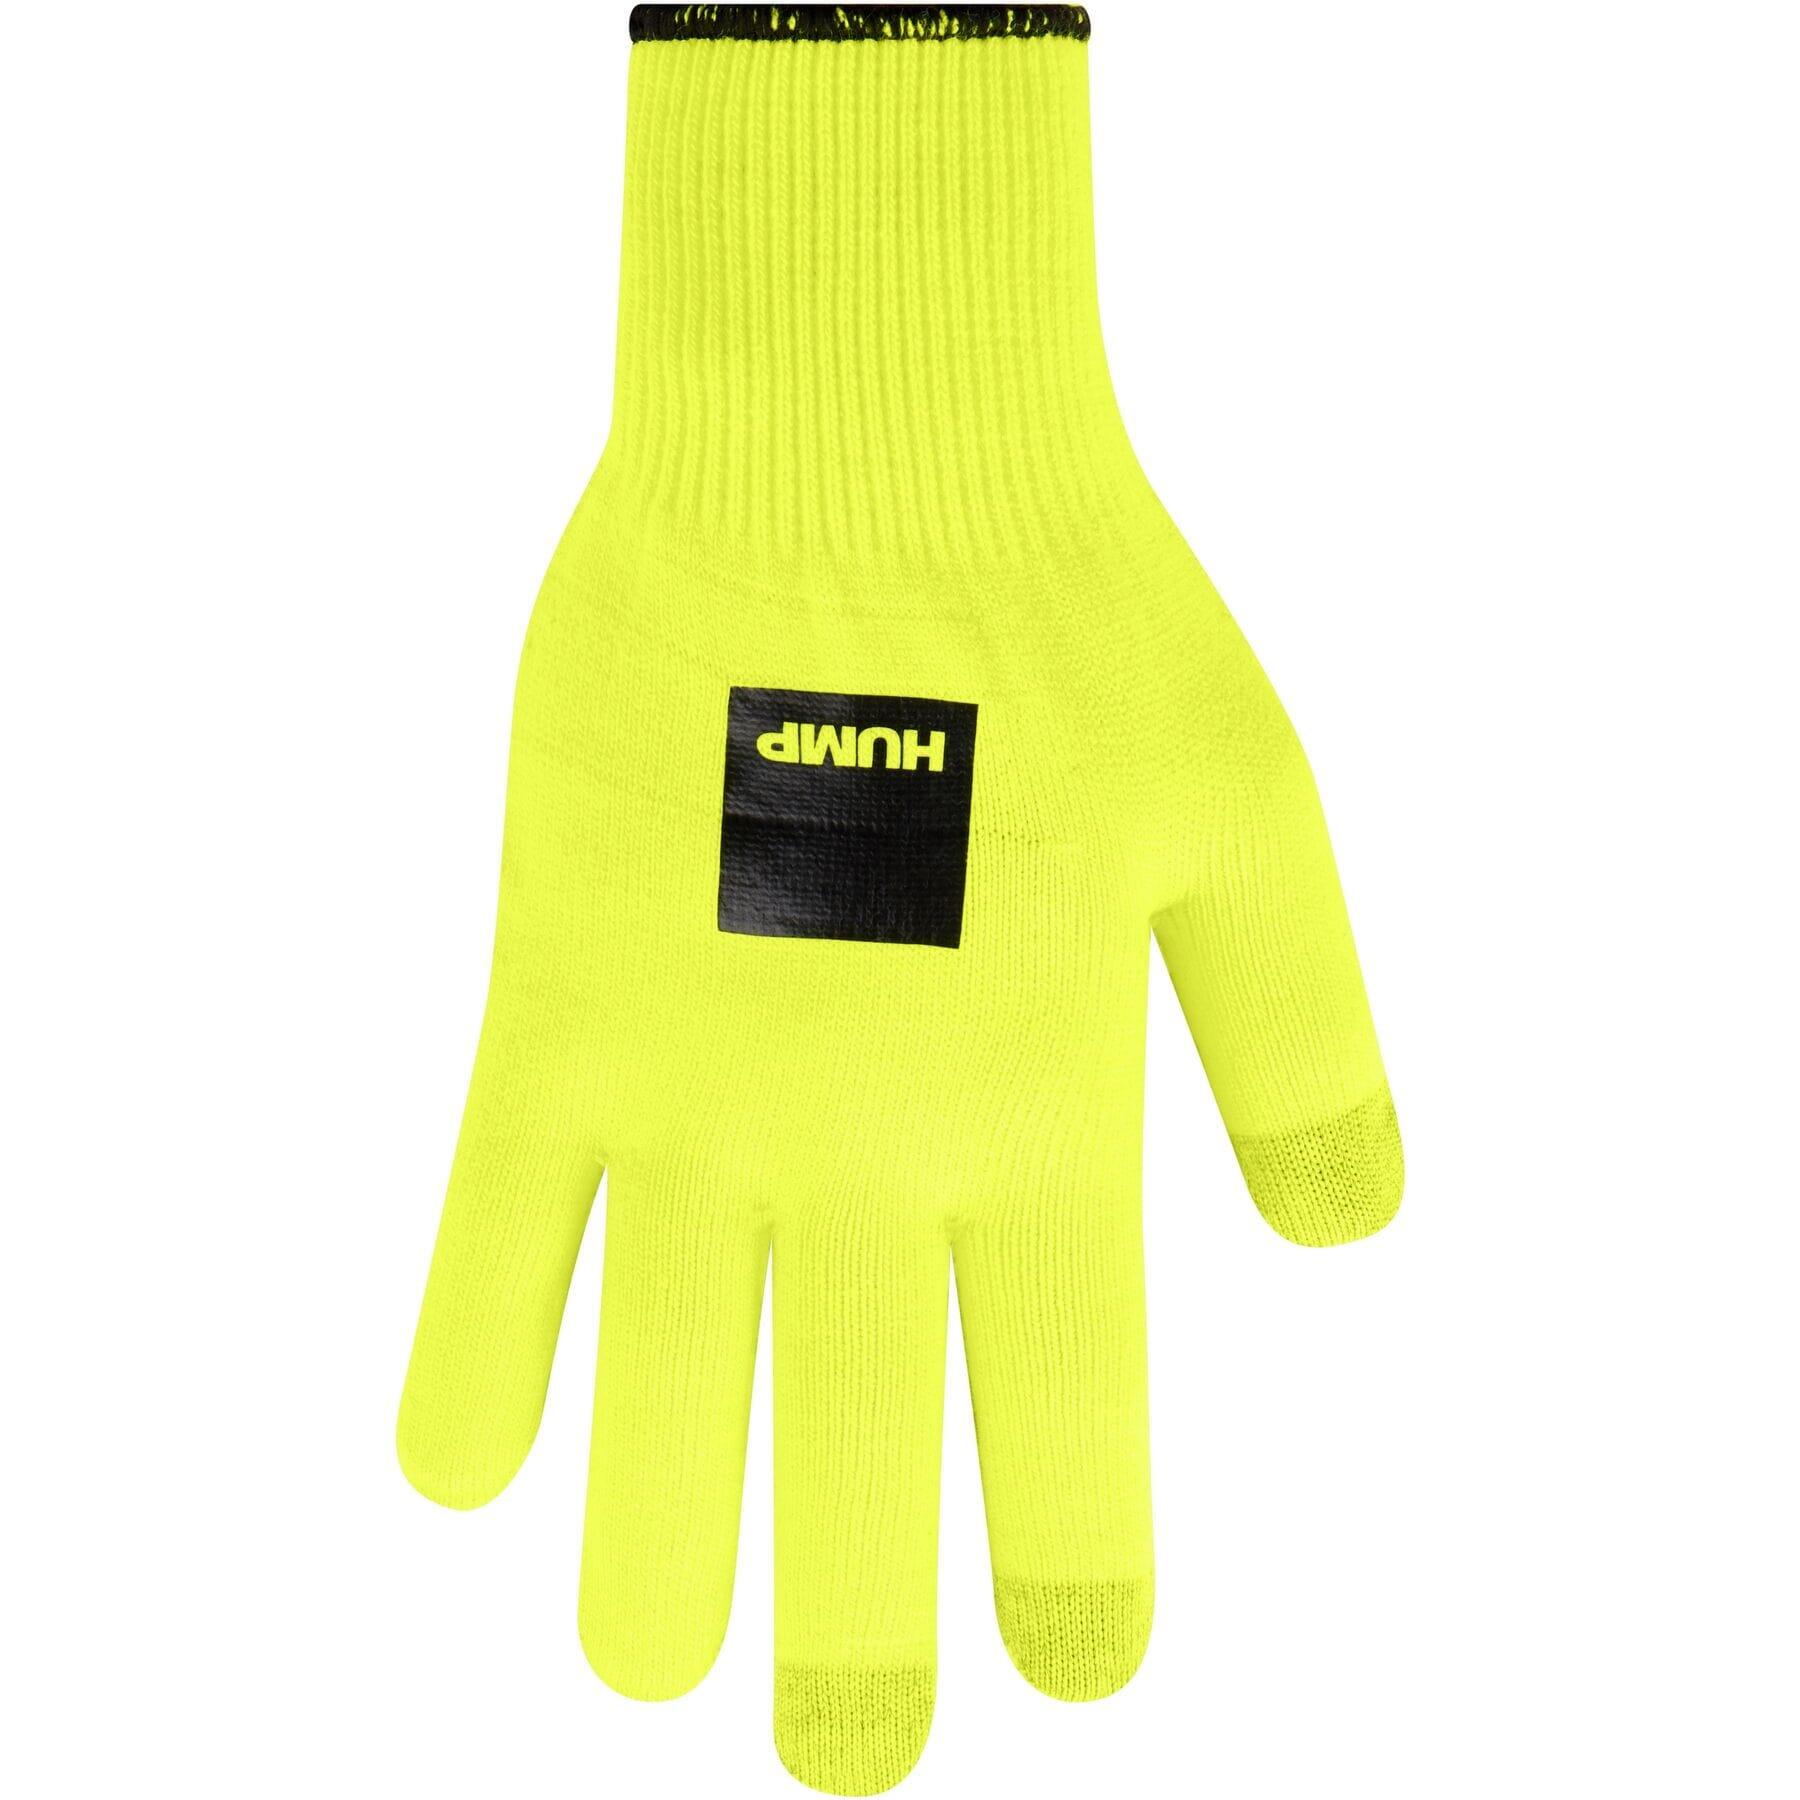 HUMP HUMP Pocket Thermal Glove - Black / Hi-Viz Yellow - X-Small - Small